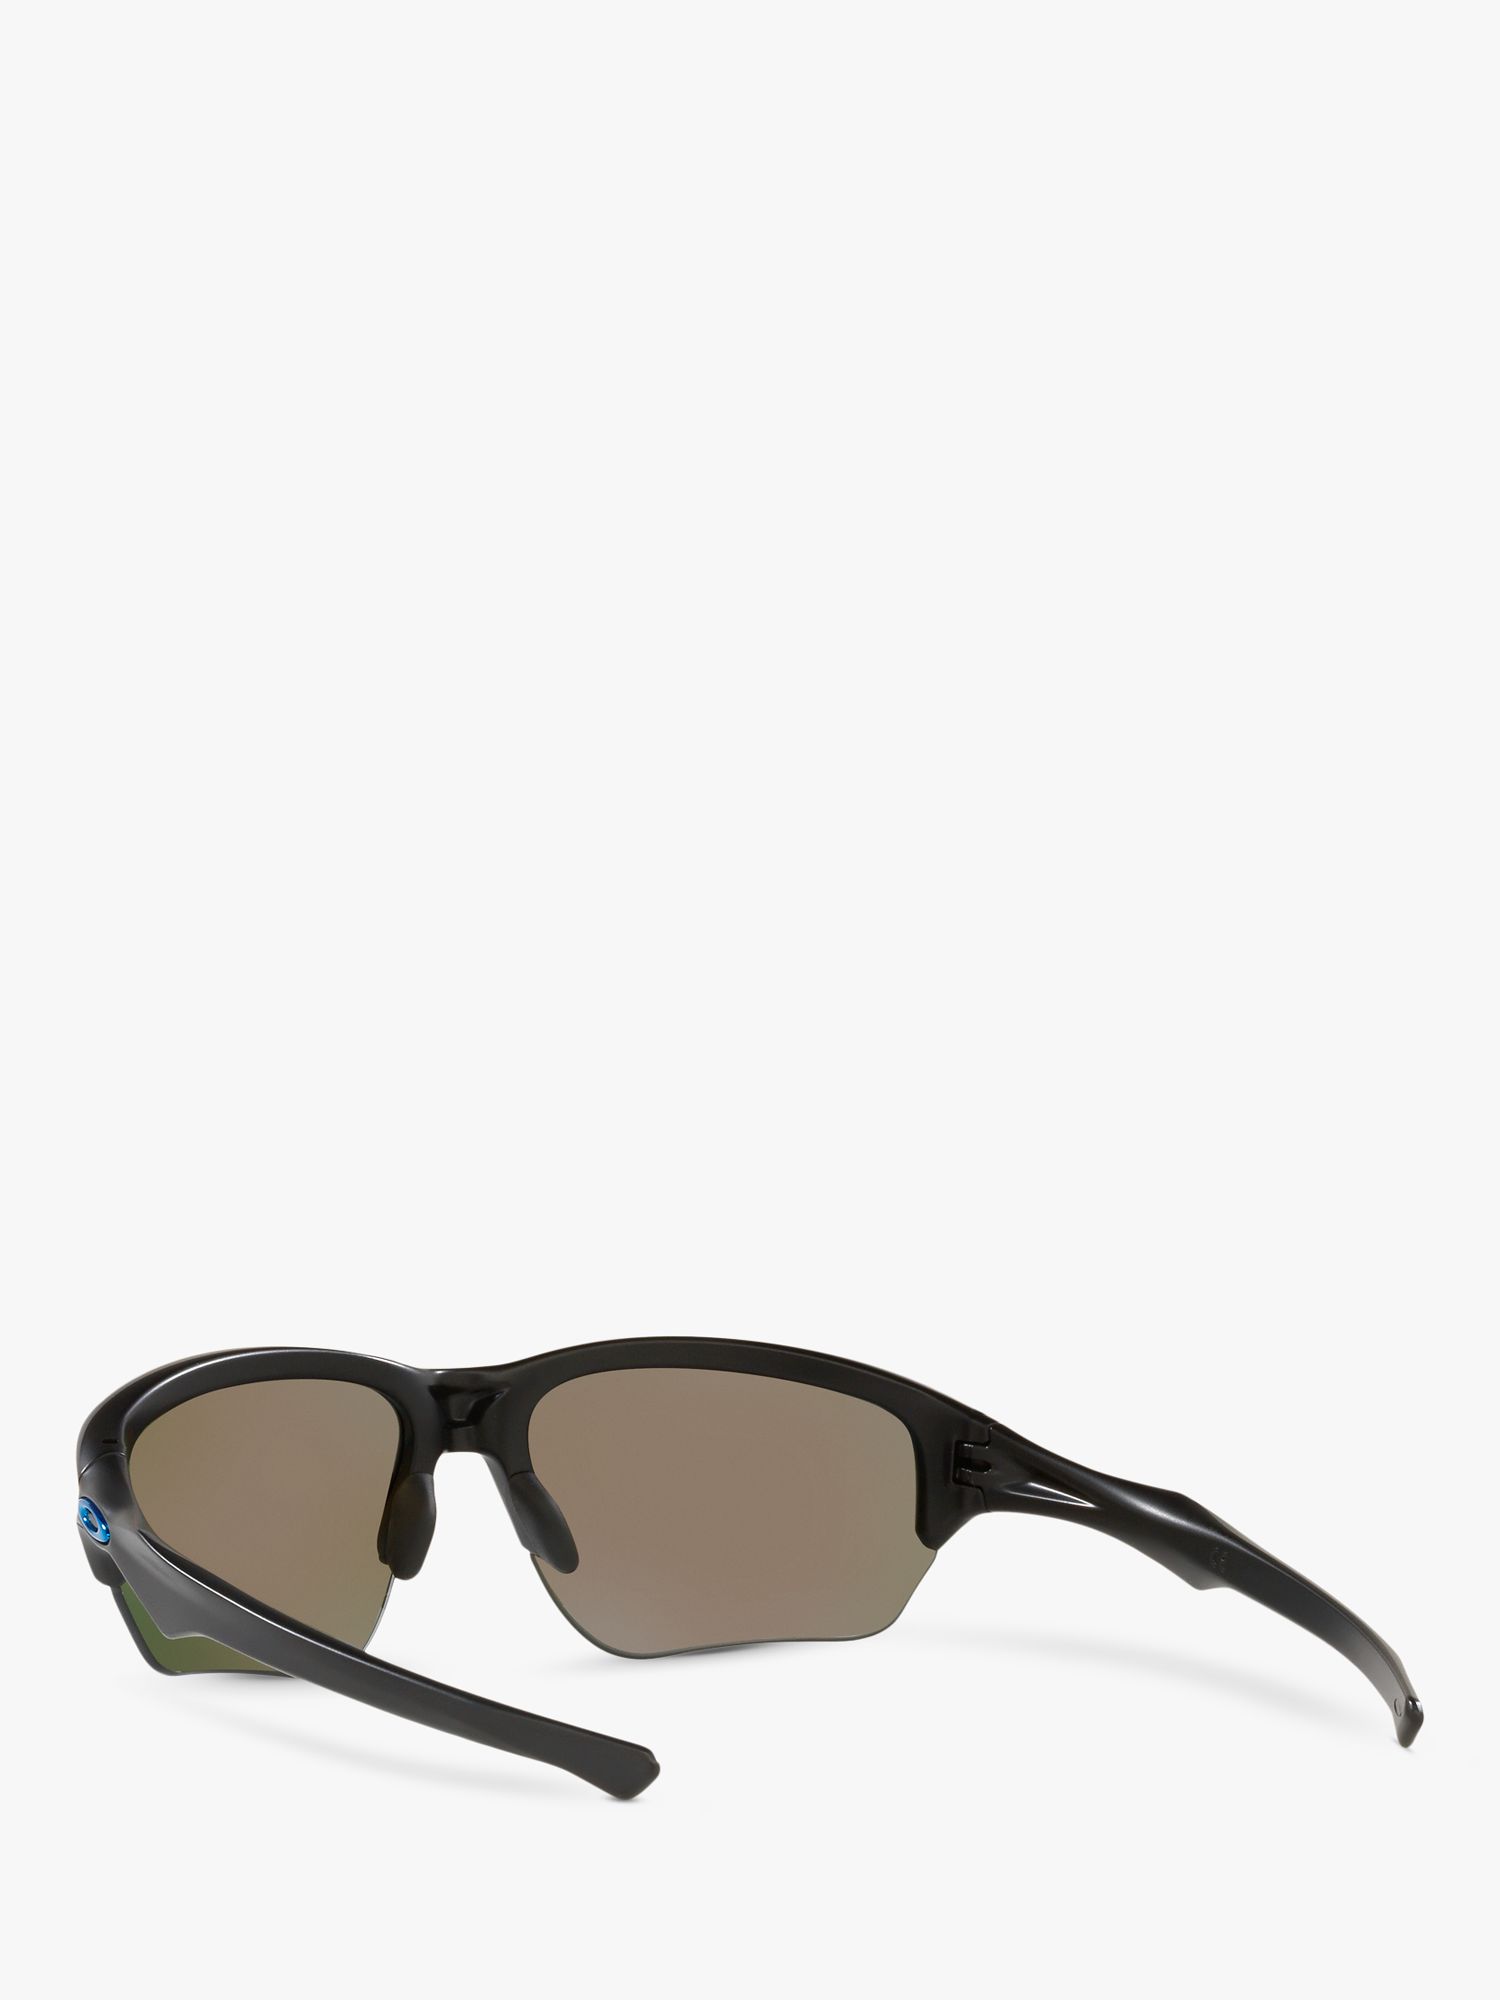 Oakley OO9363 Men's Flak Beta Prizm Rectangular Sunglasses, Matte Black /Blue